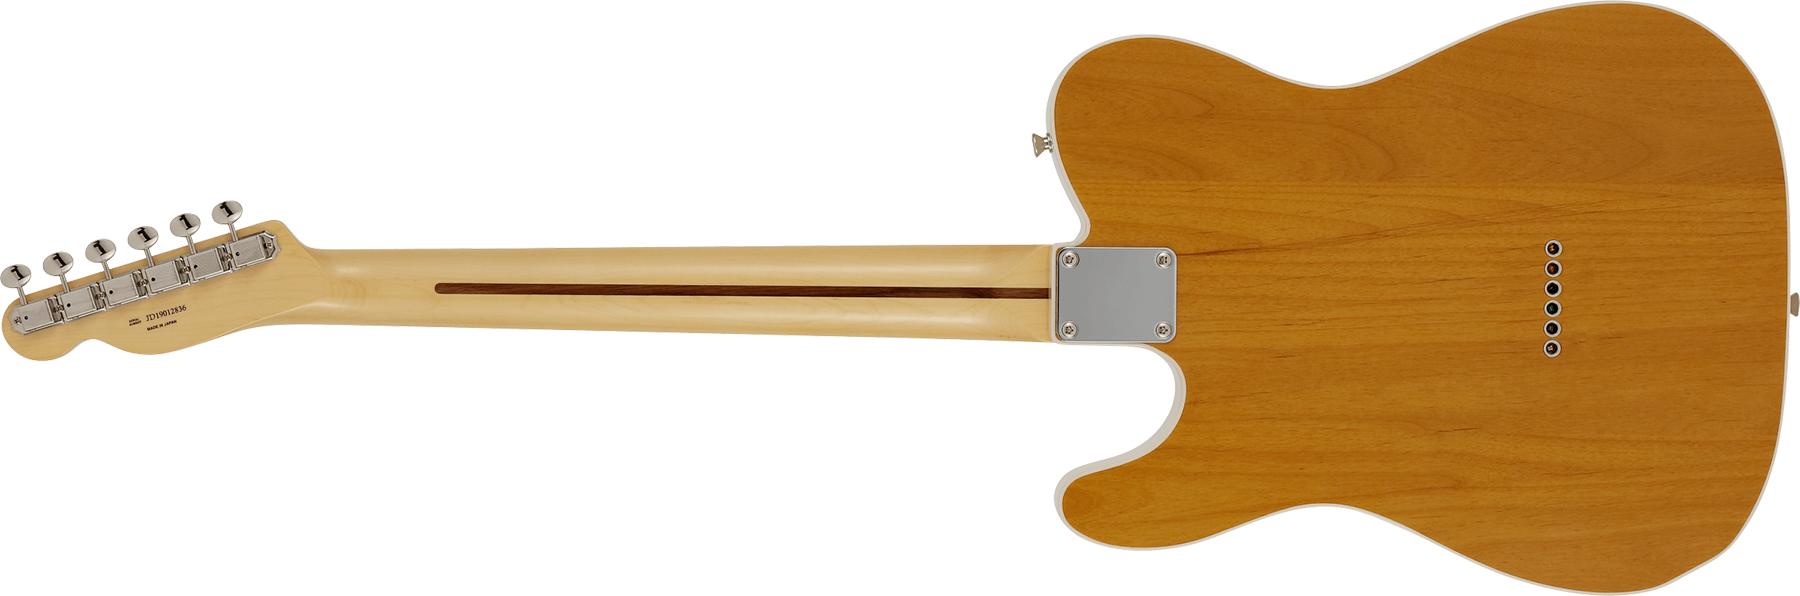 Fender Tele Mhak  Art Gallery Jap Hs Mn - Natural - Guitarra eléctrica con forma de tel - Variation 1